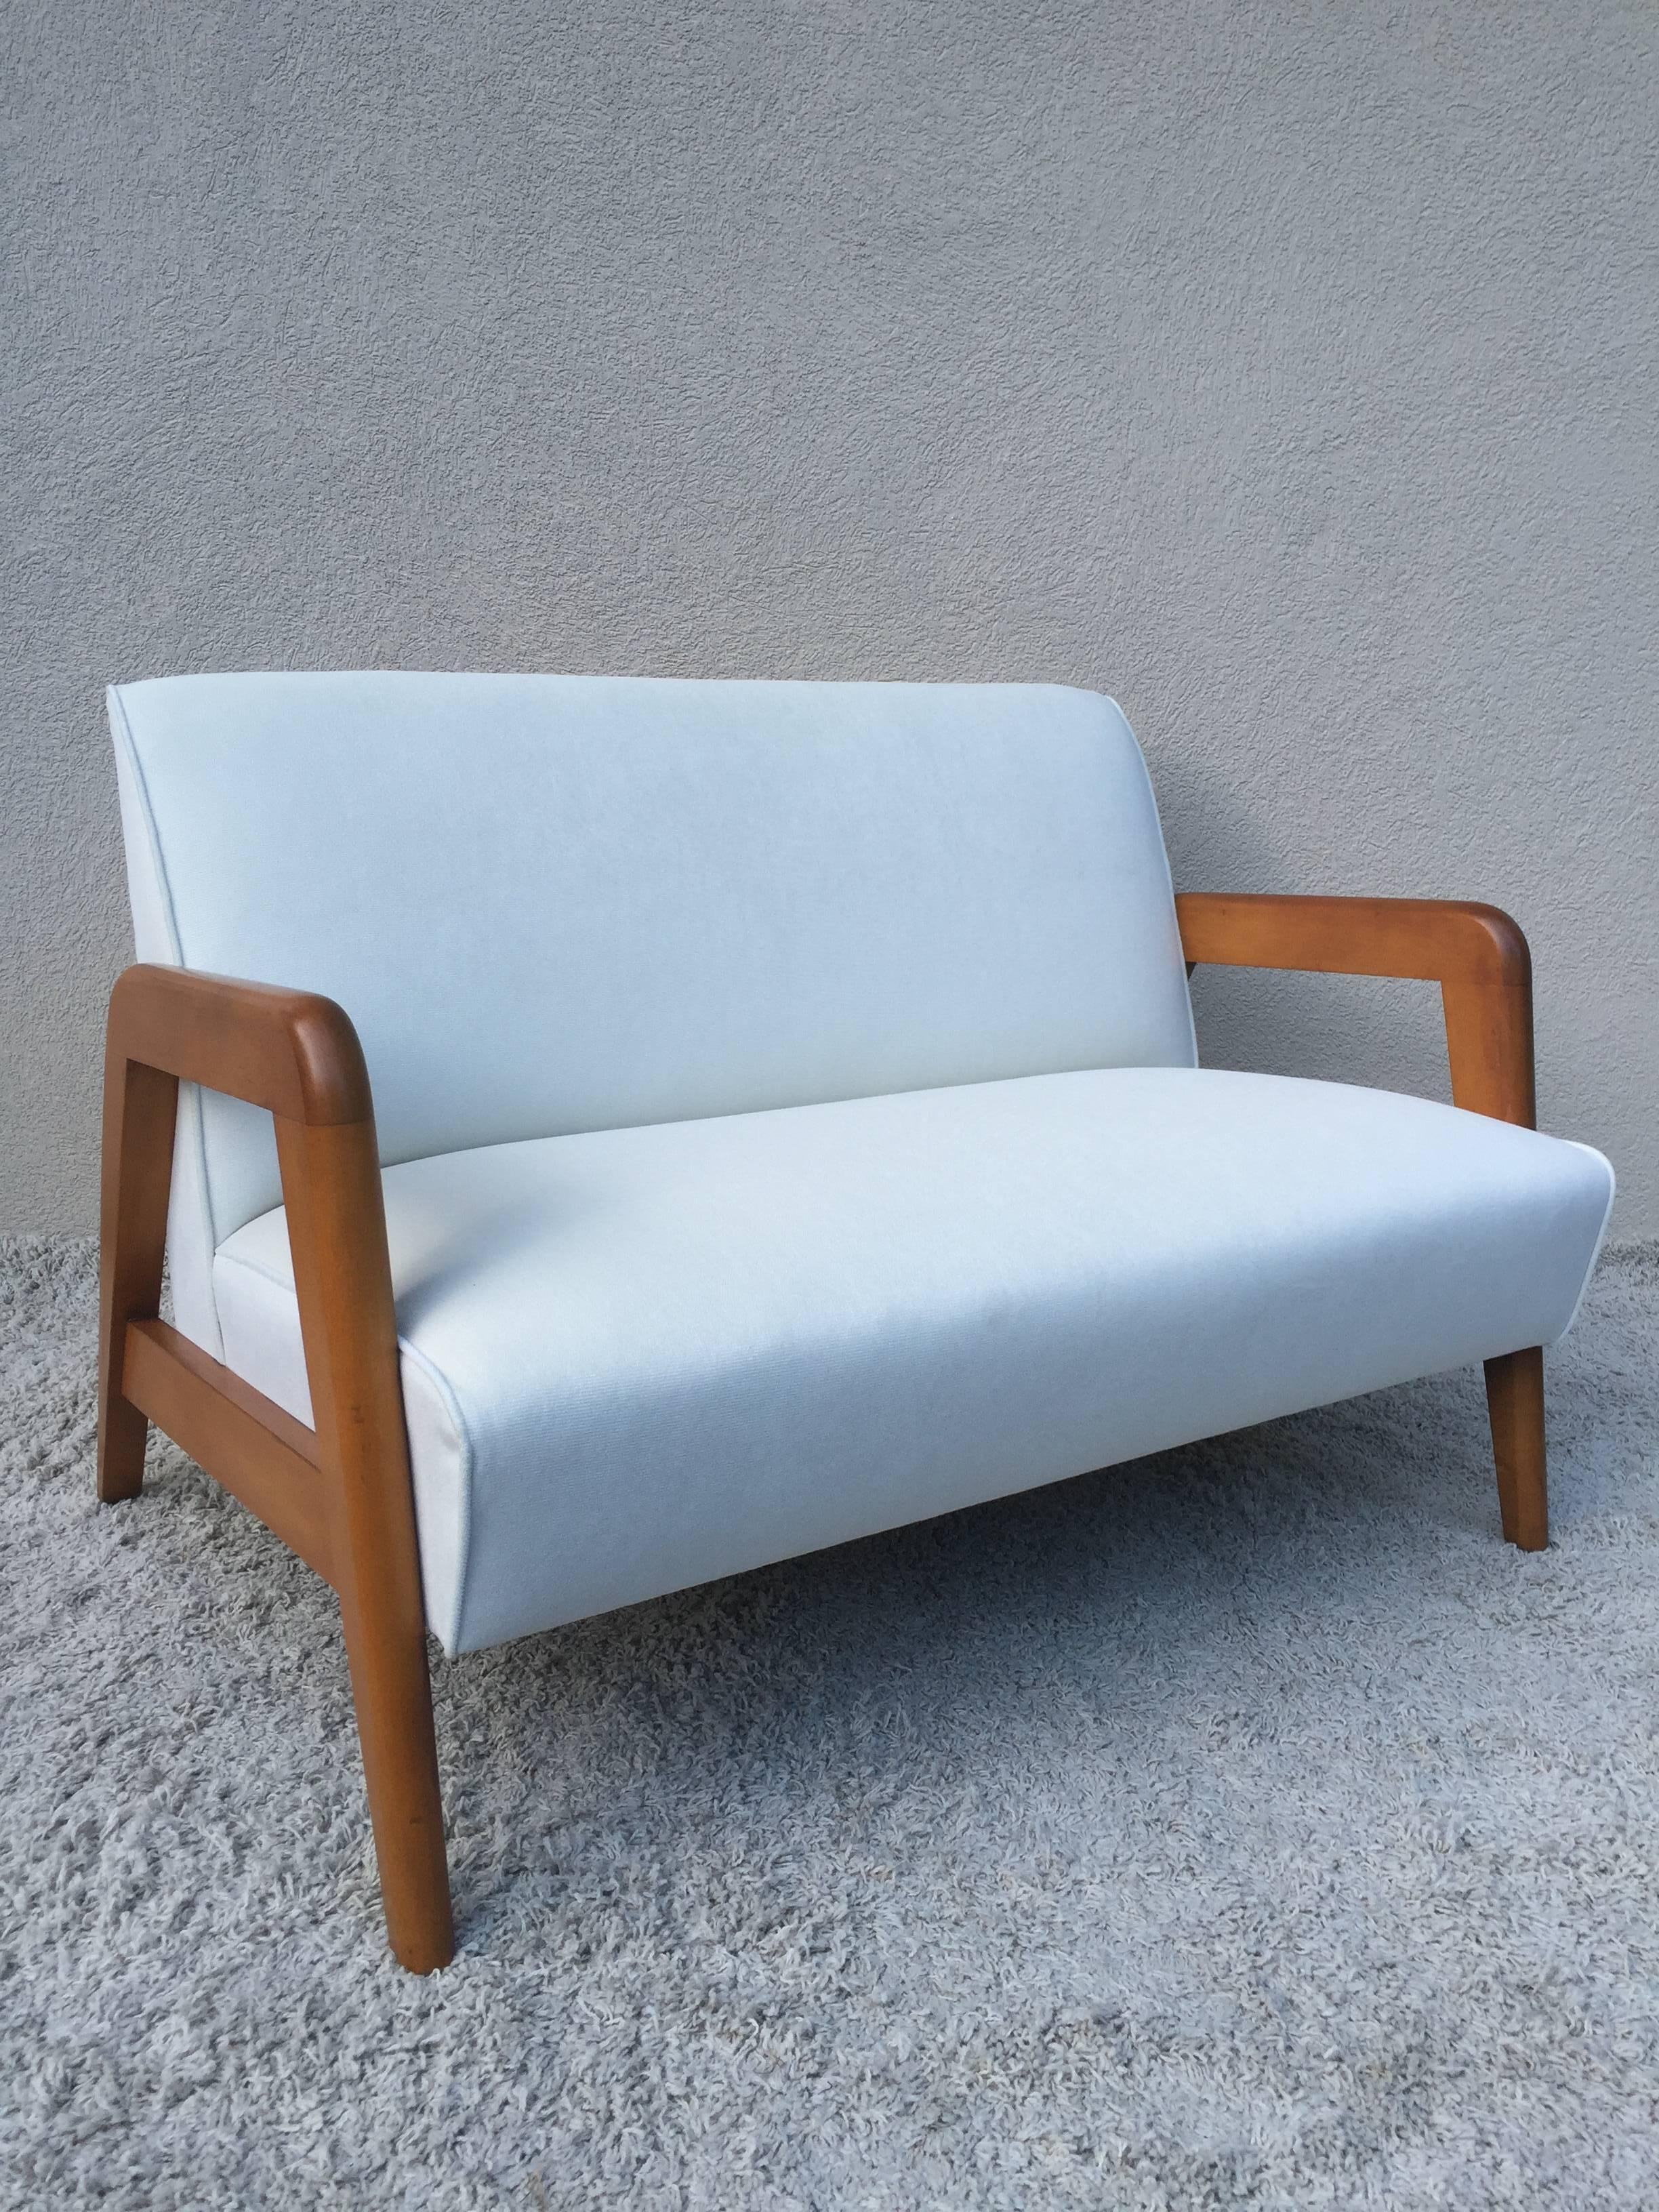 Leslie Diamond for Conant Ball Art Modern Love Seat  with modernist streamline arm design, petite size.